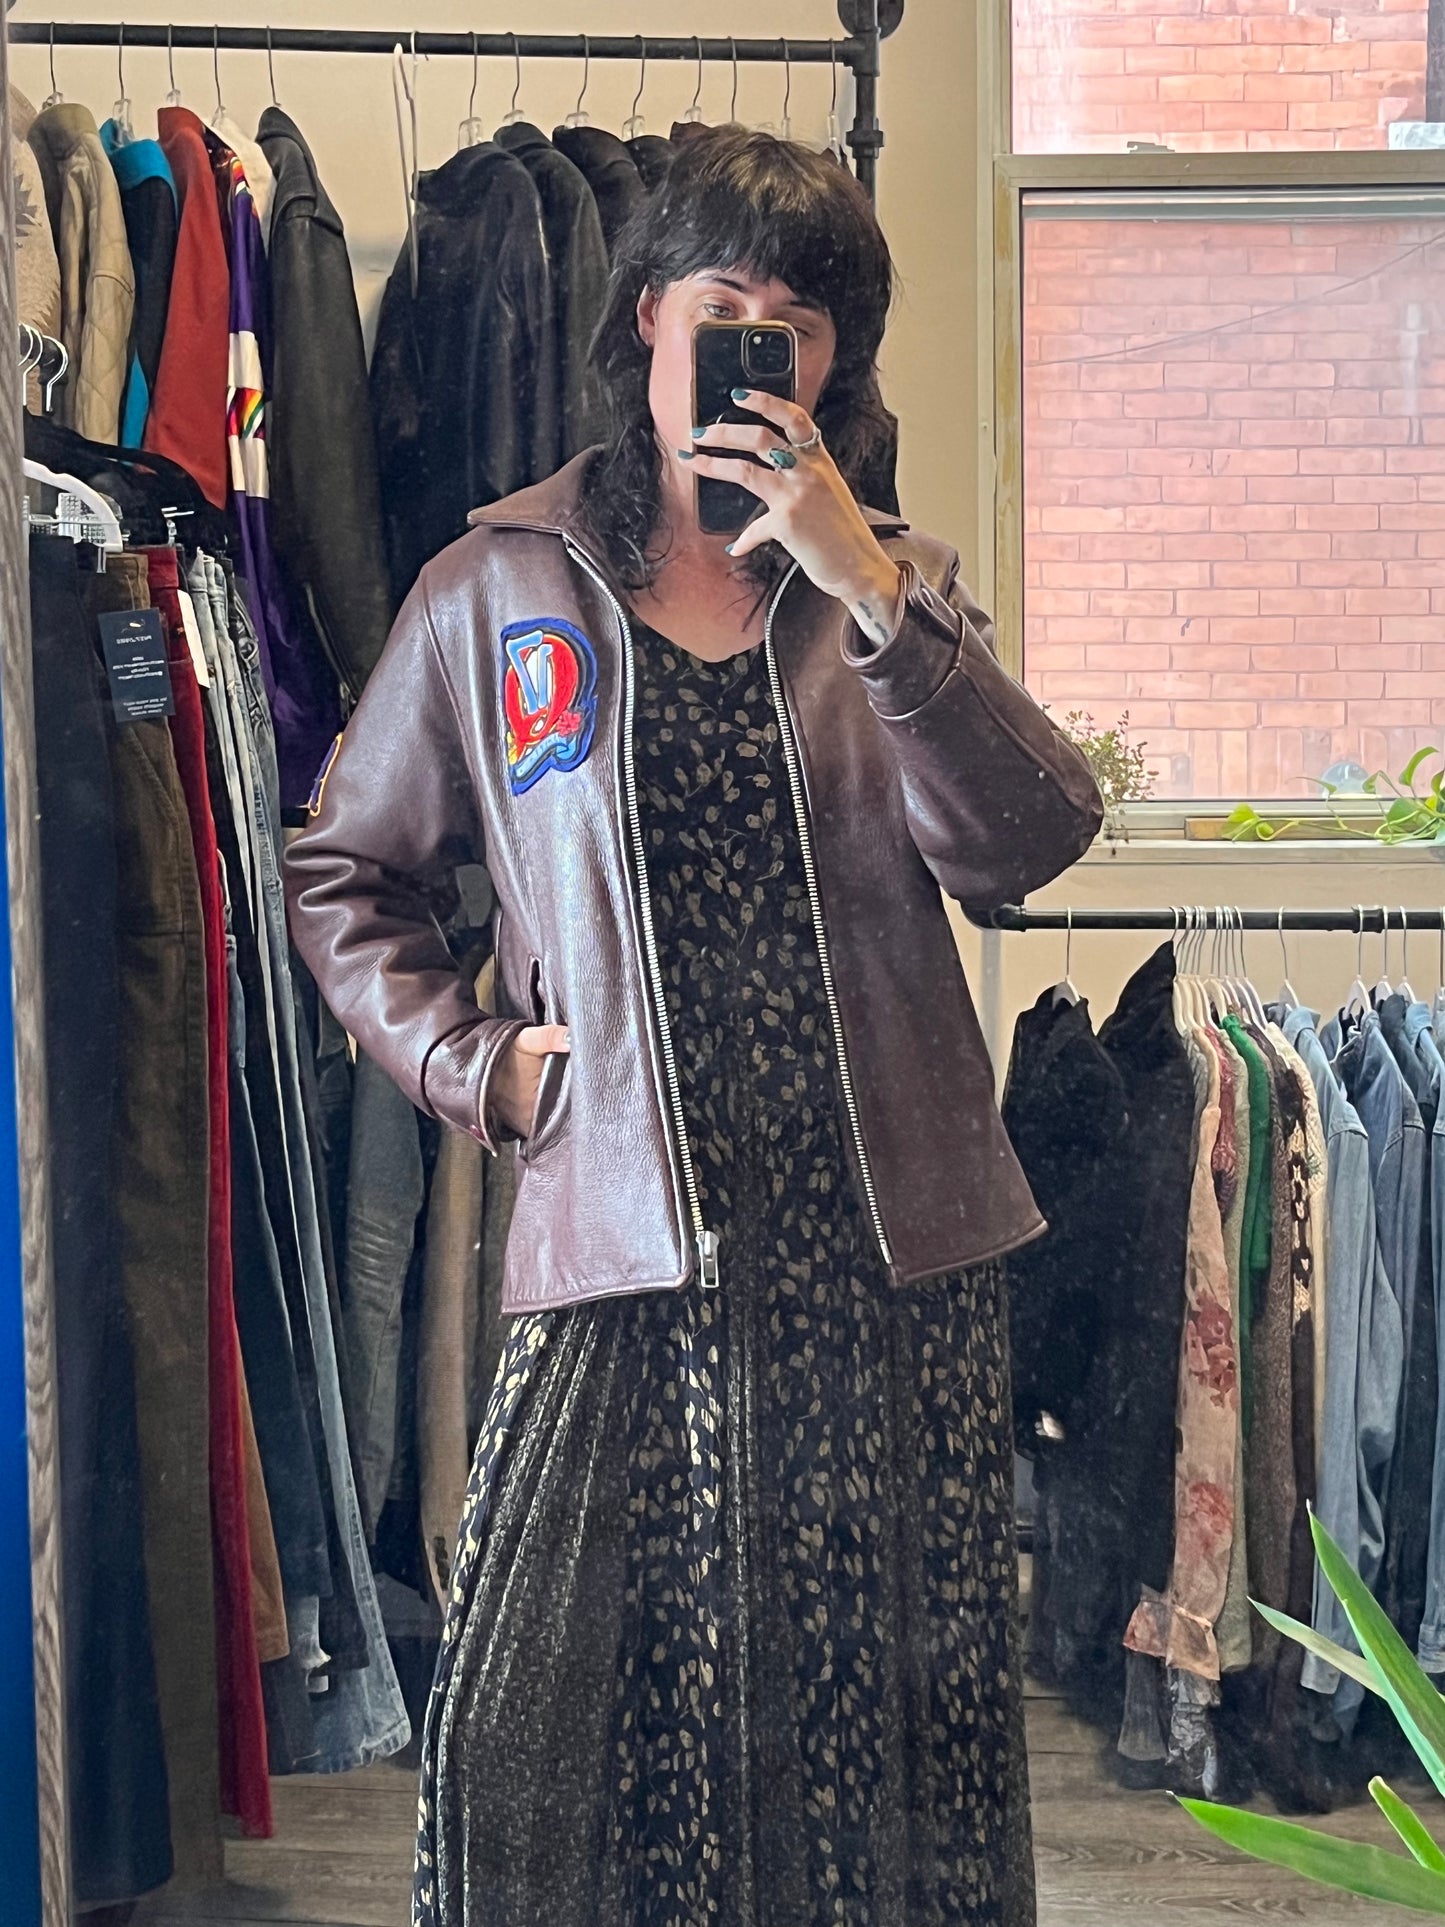 80’s Vintage Queens Burgundy Leather Varsity Letterman Jacket / Size M-L